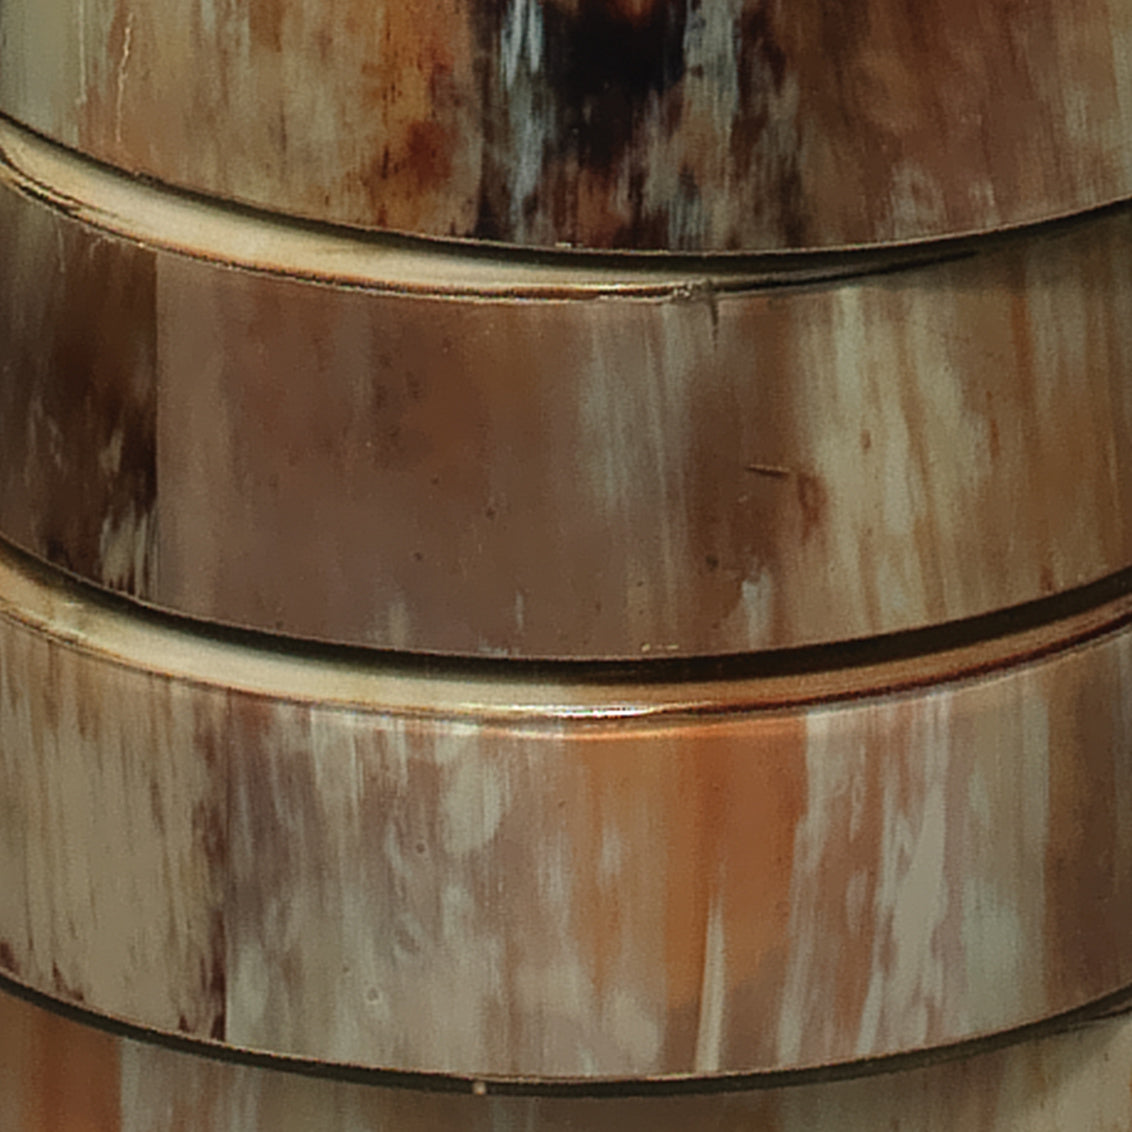 alternate closeup view of horn discs